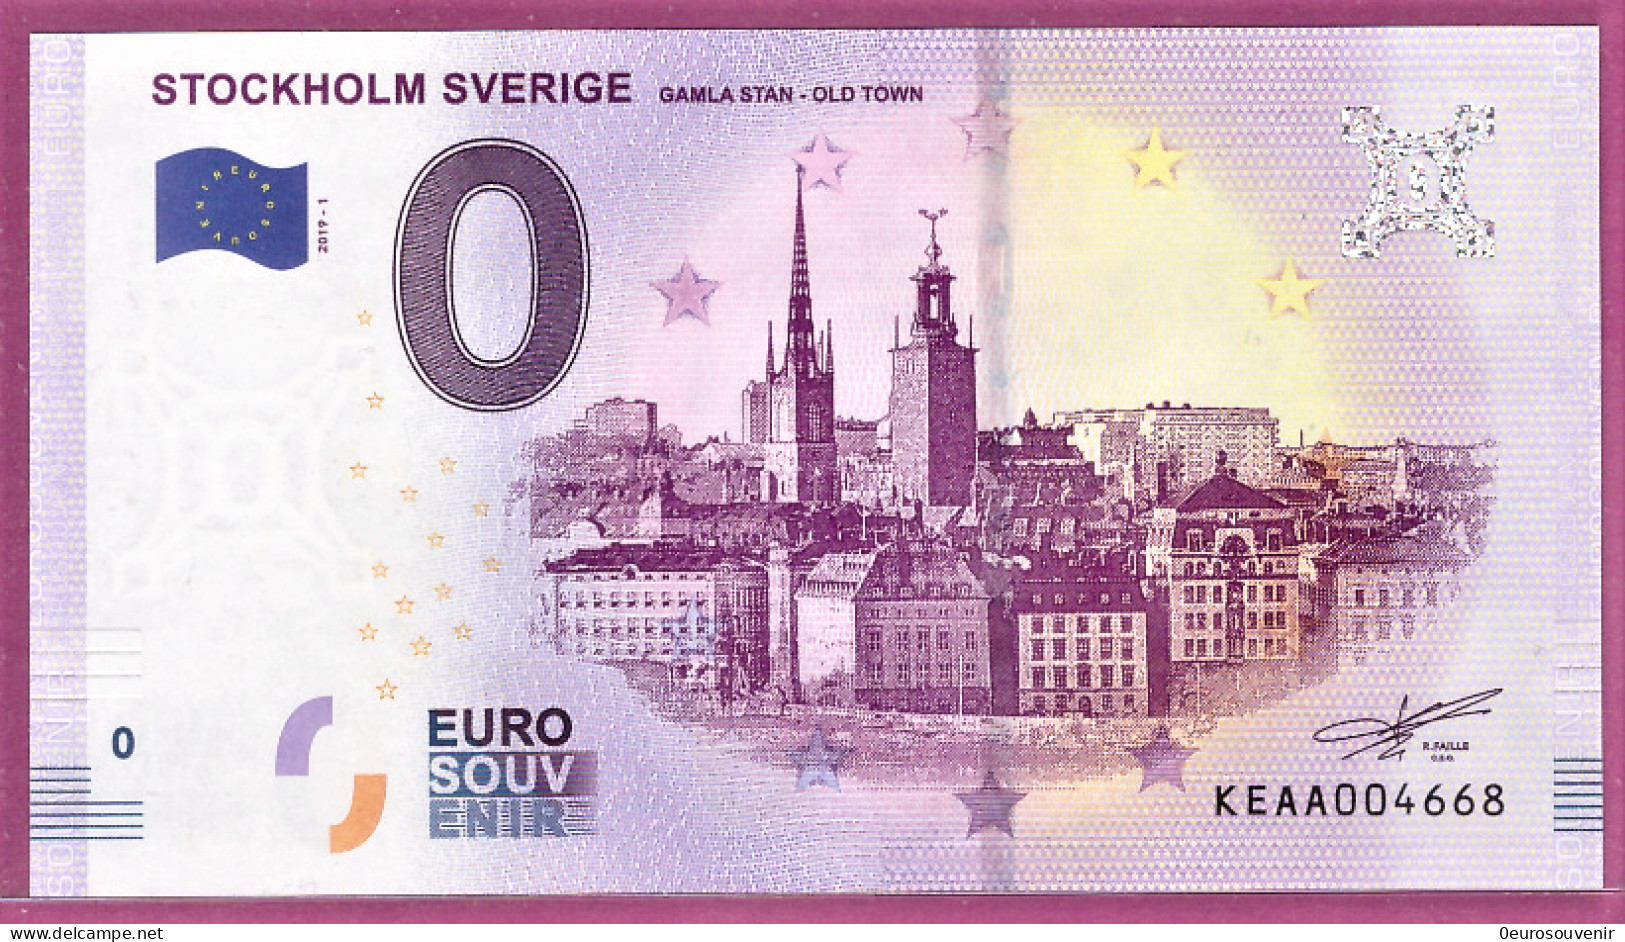 0-Euro KEAA 2019-1 STOCKHOLM SVERIGE - GAMLA STAN - OLD TOWN - Privatentwürfe